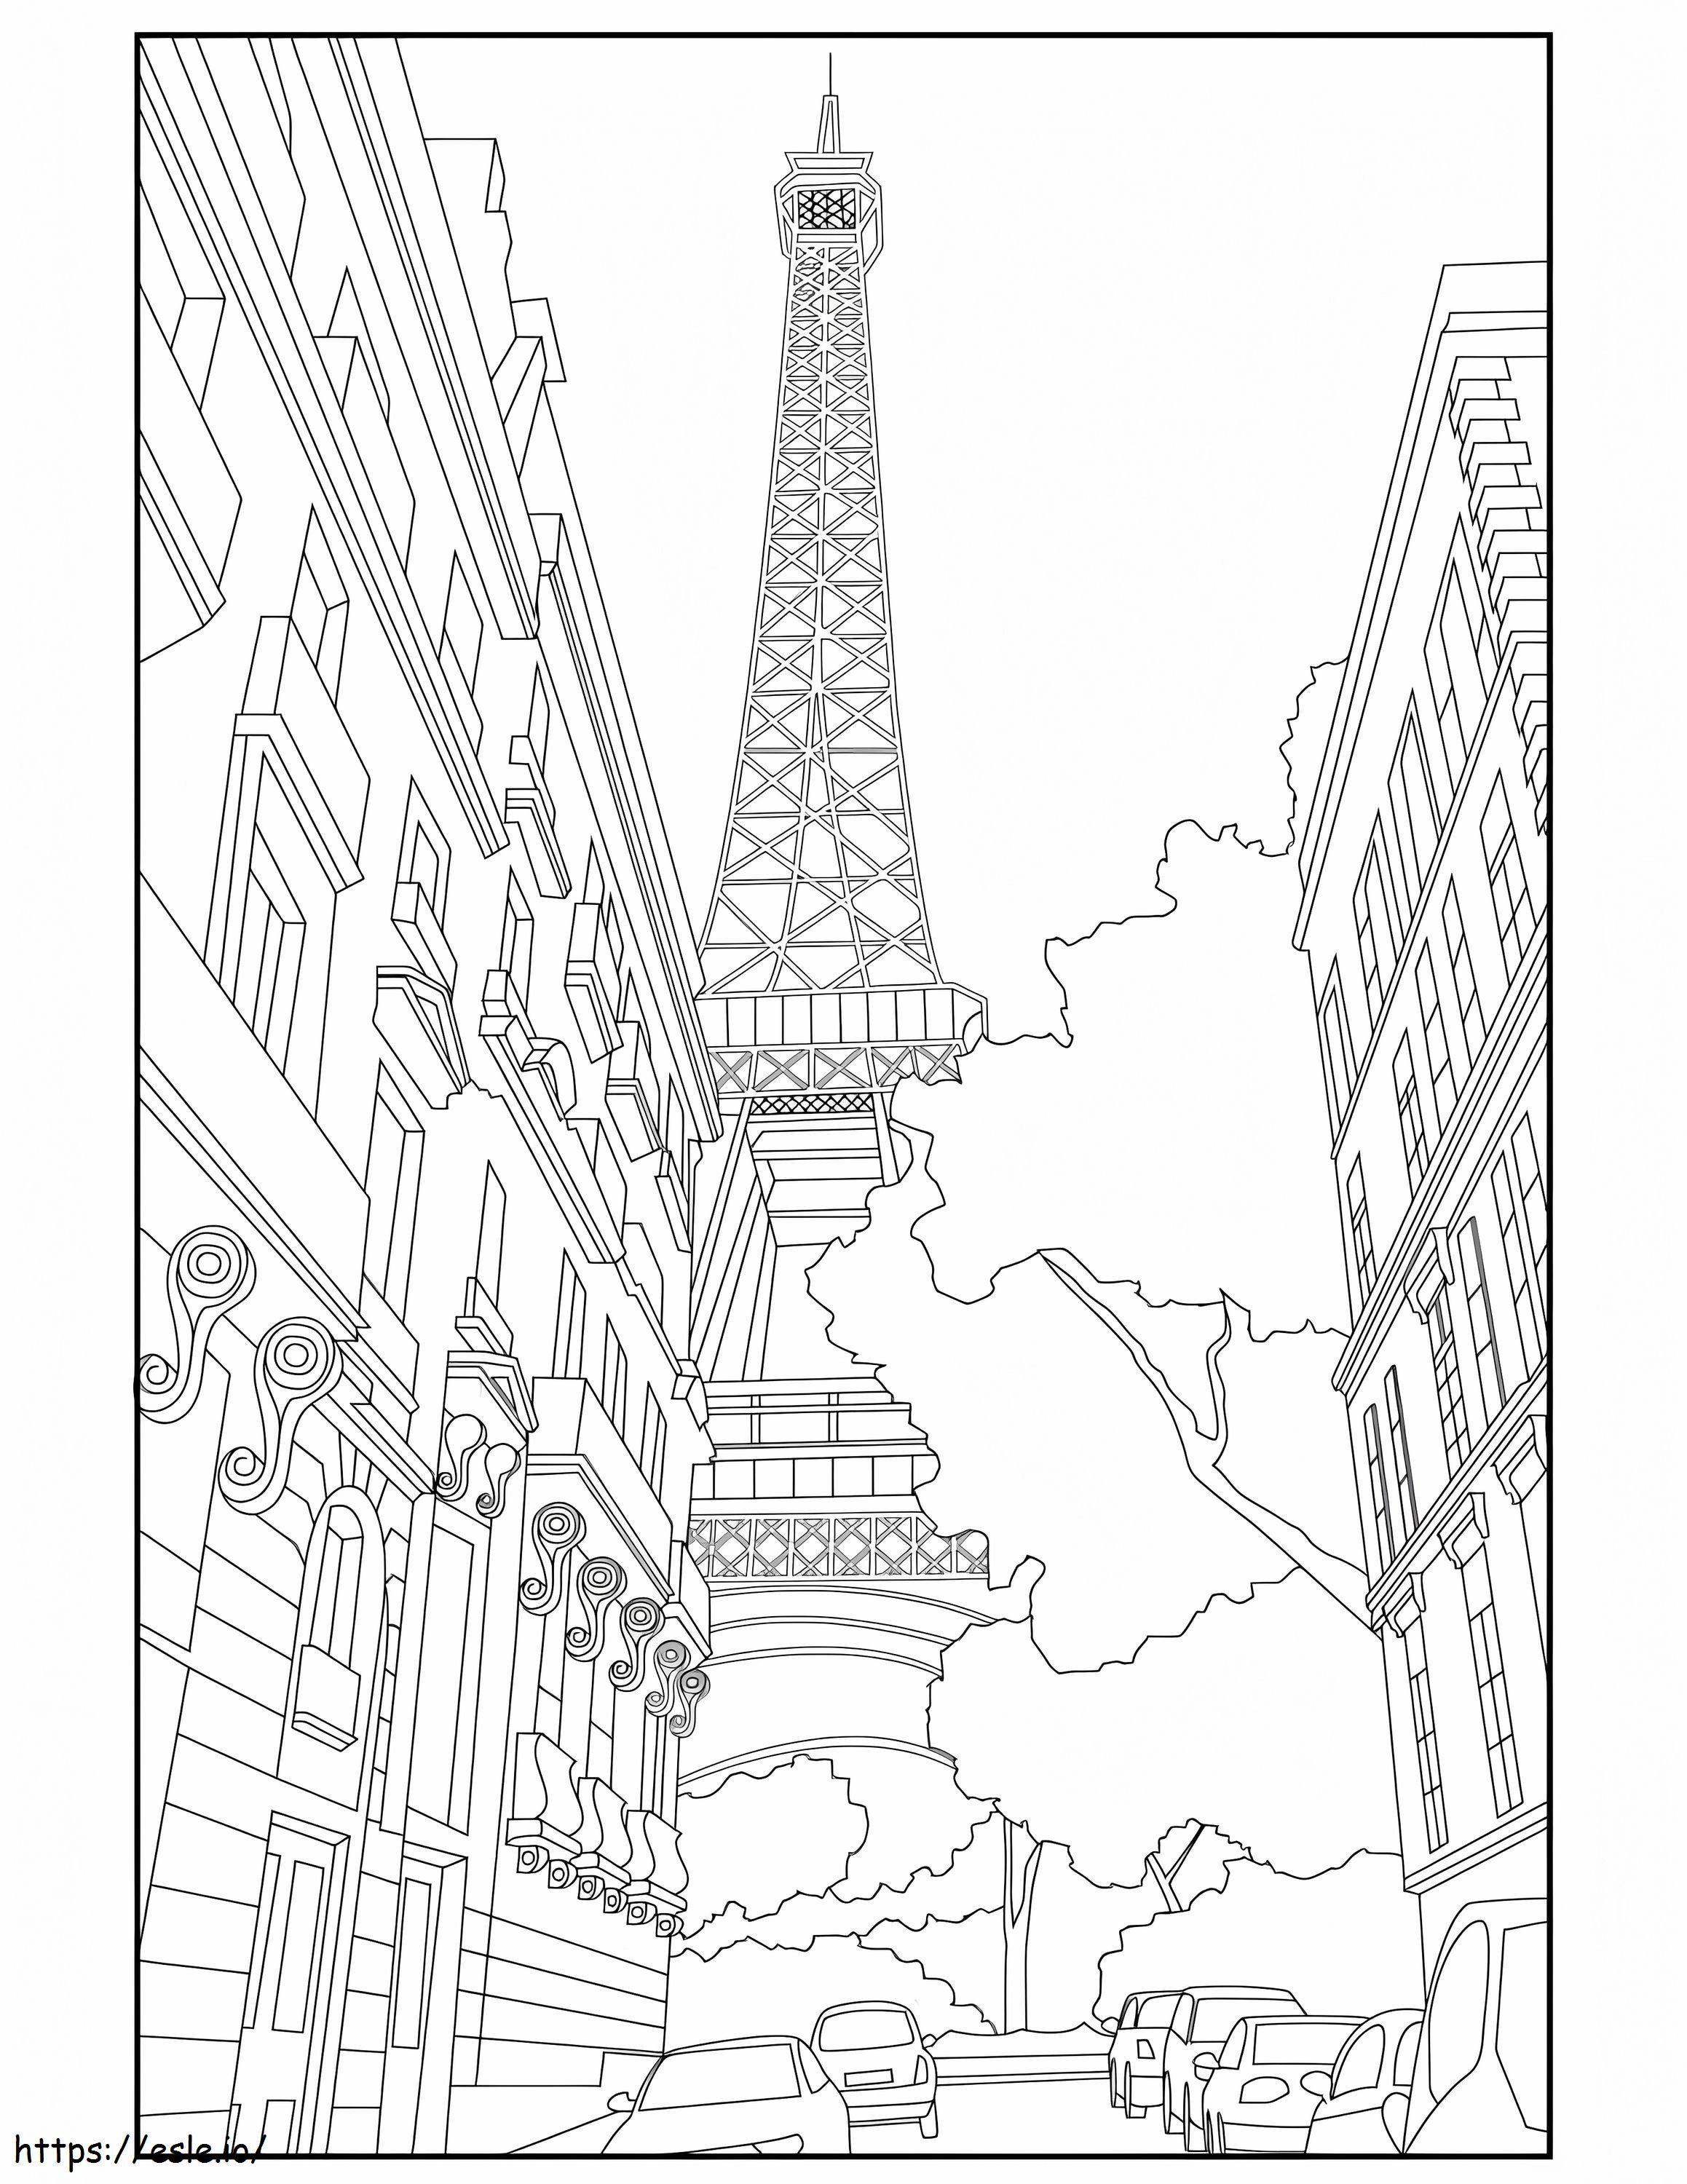 Paris Normal City coloring page